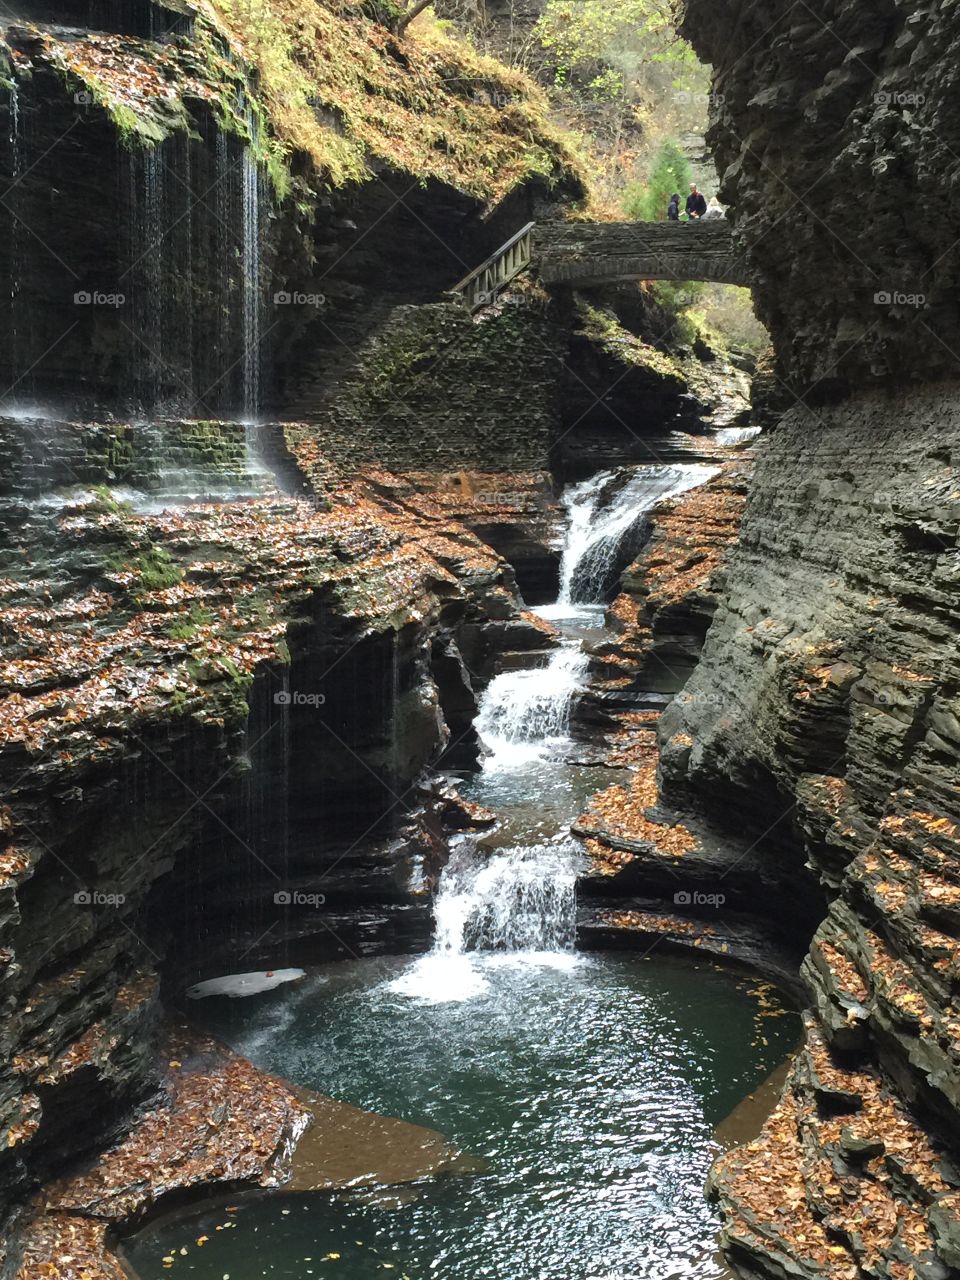 Watkins Glen State Patk Waterfalls in New York